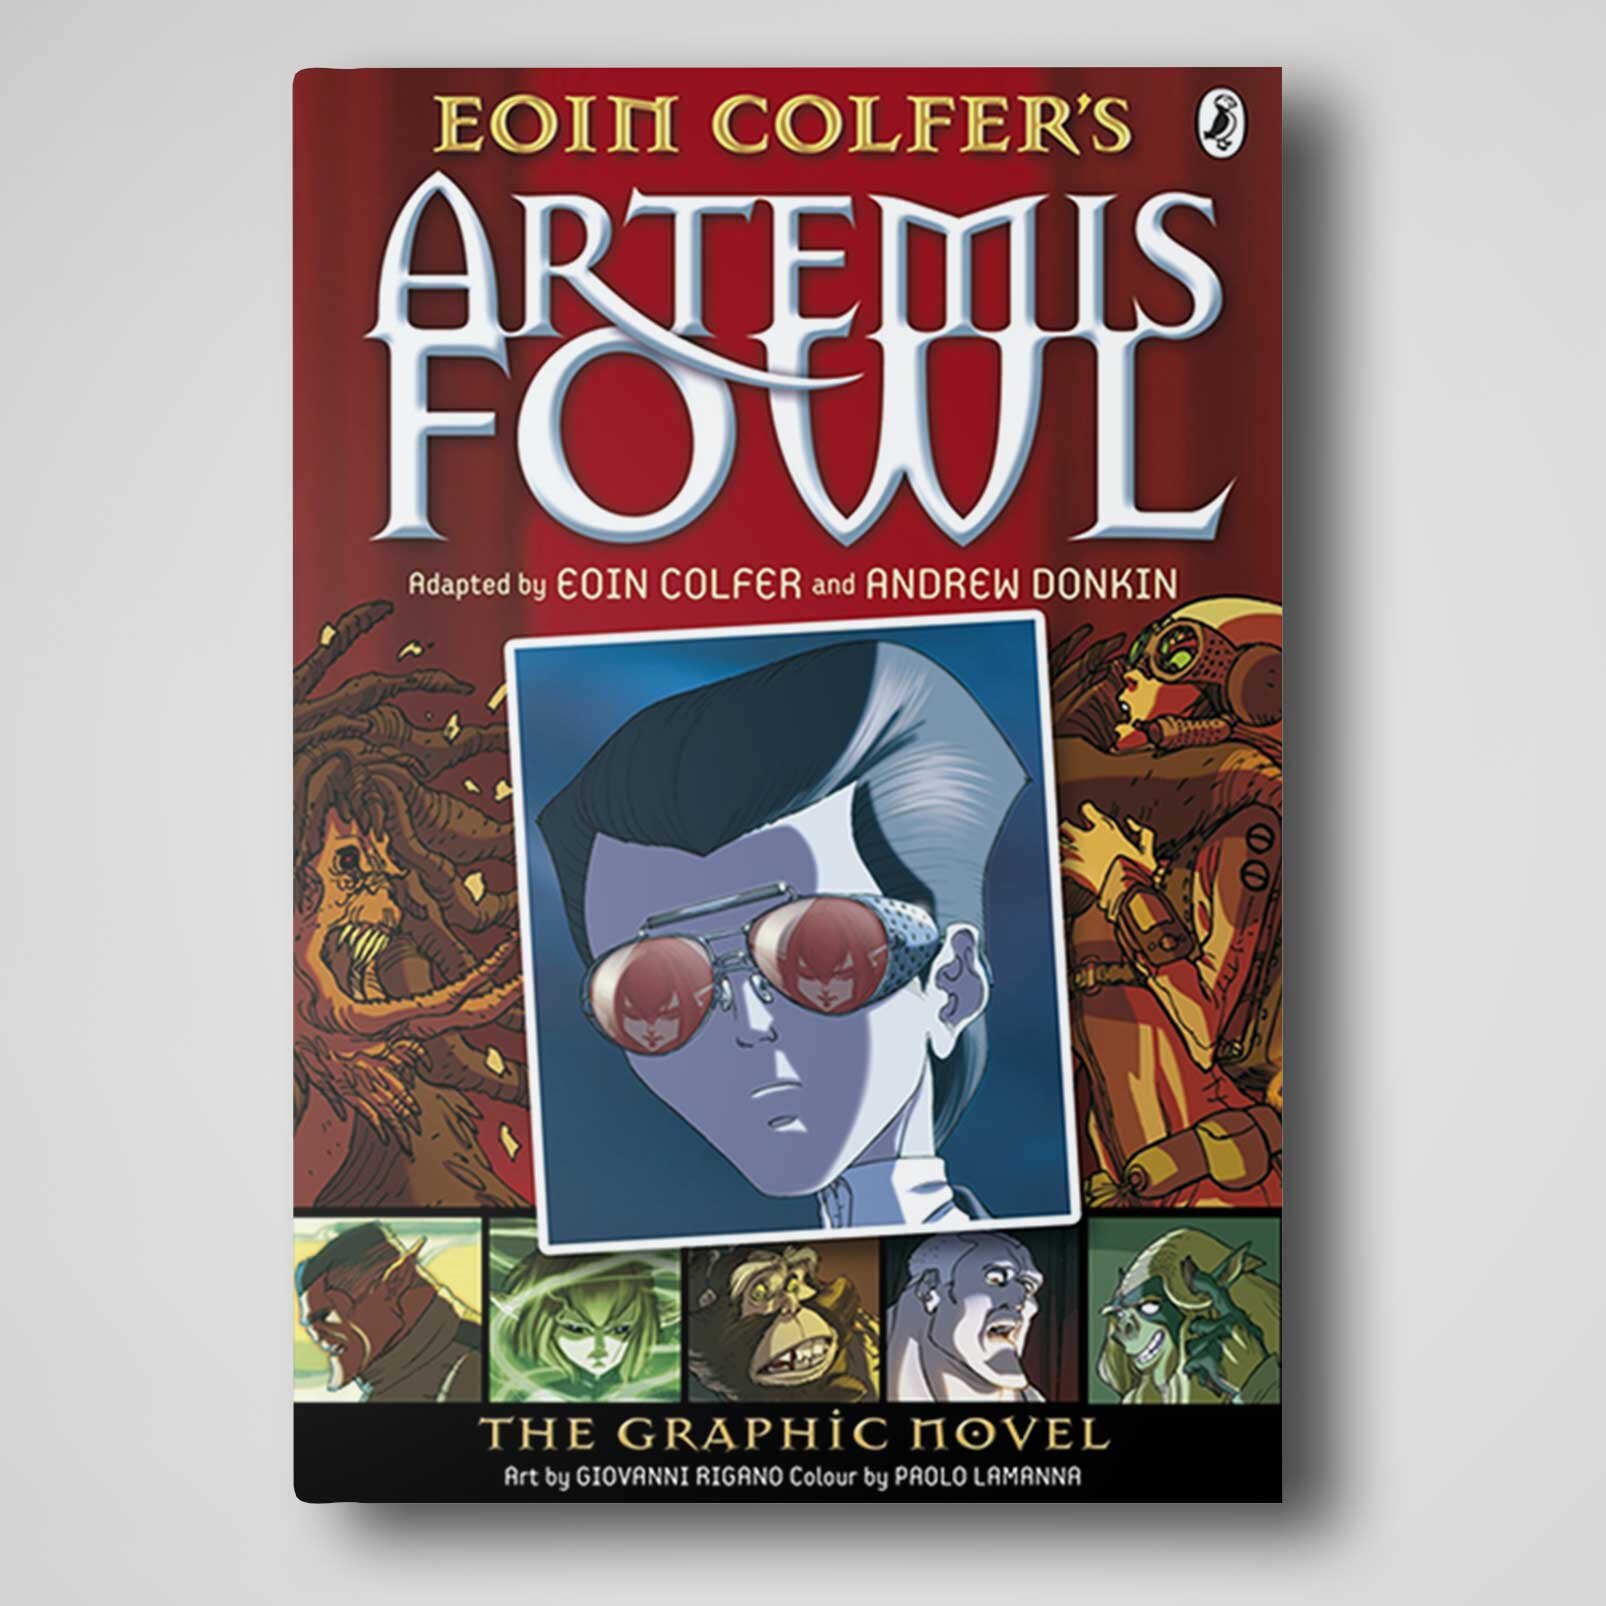 The Artemis Fowl Books – Book Cave